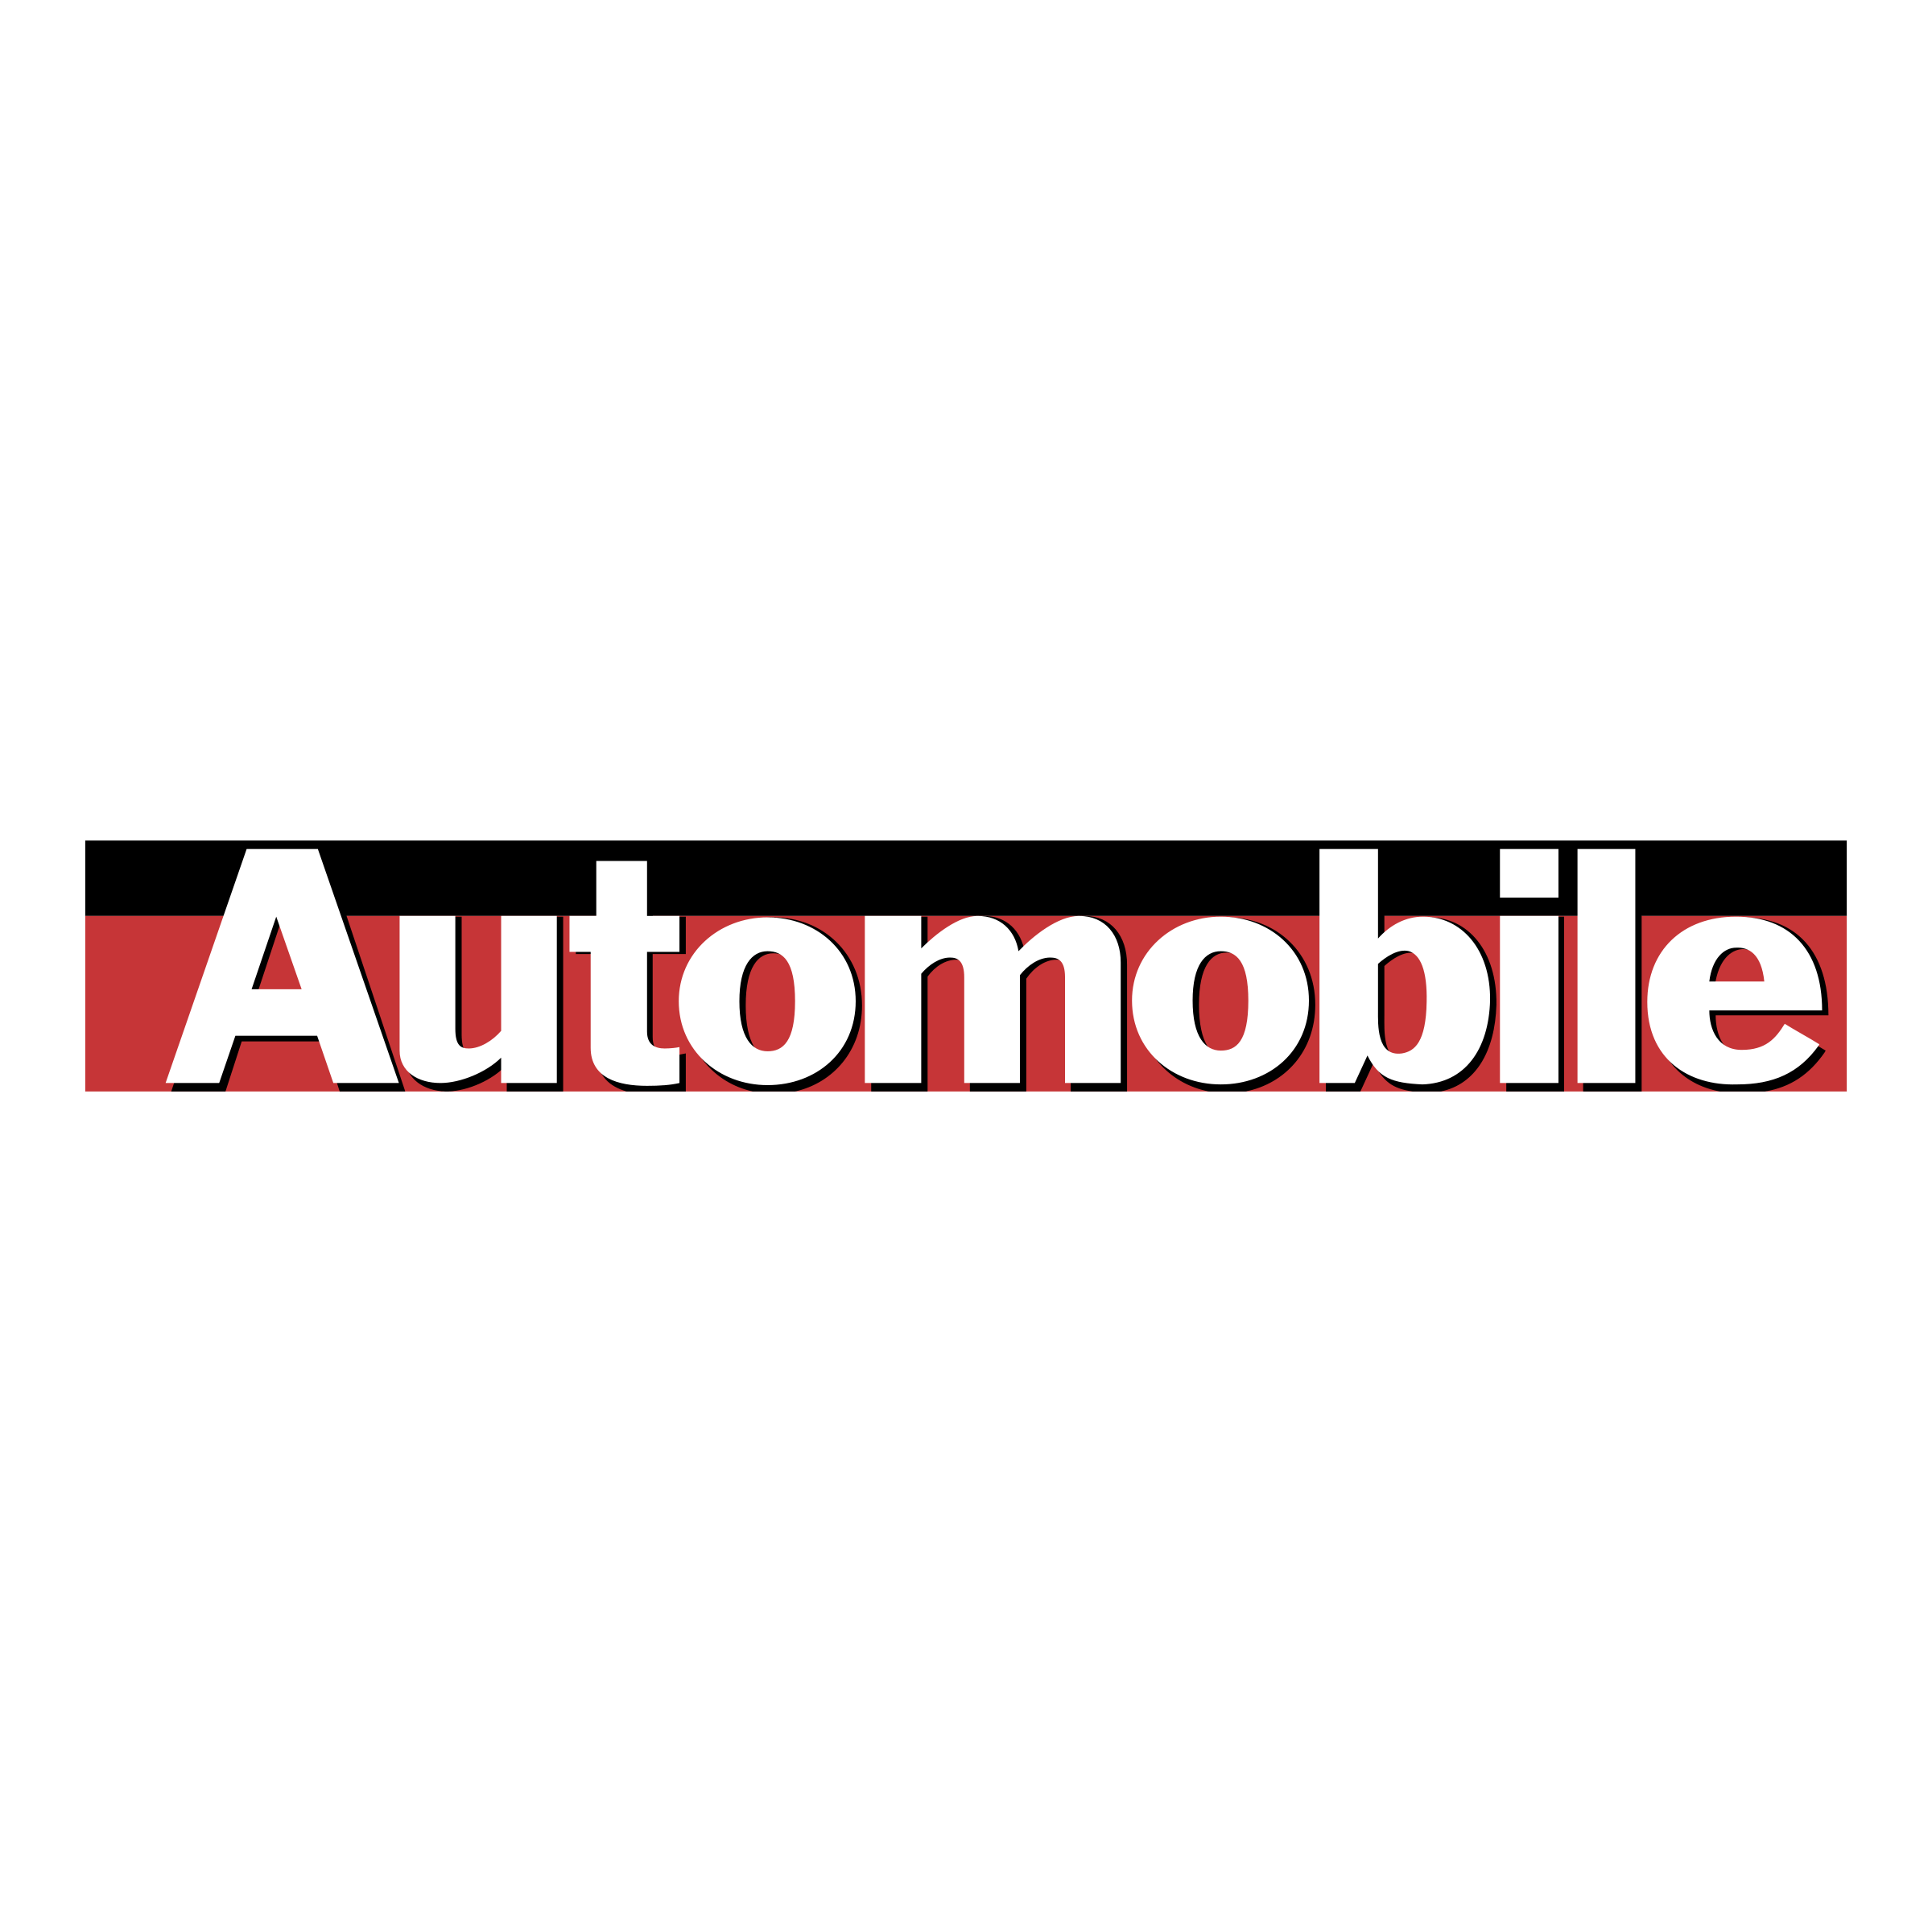 Automobile Logo - Automobile Logo PNG Transparent & SVG Vector - Freebie Supply